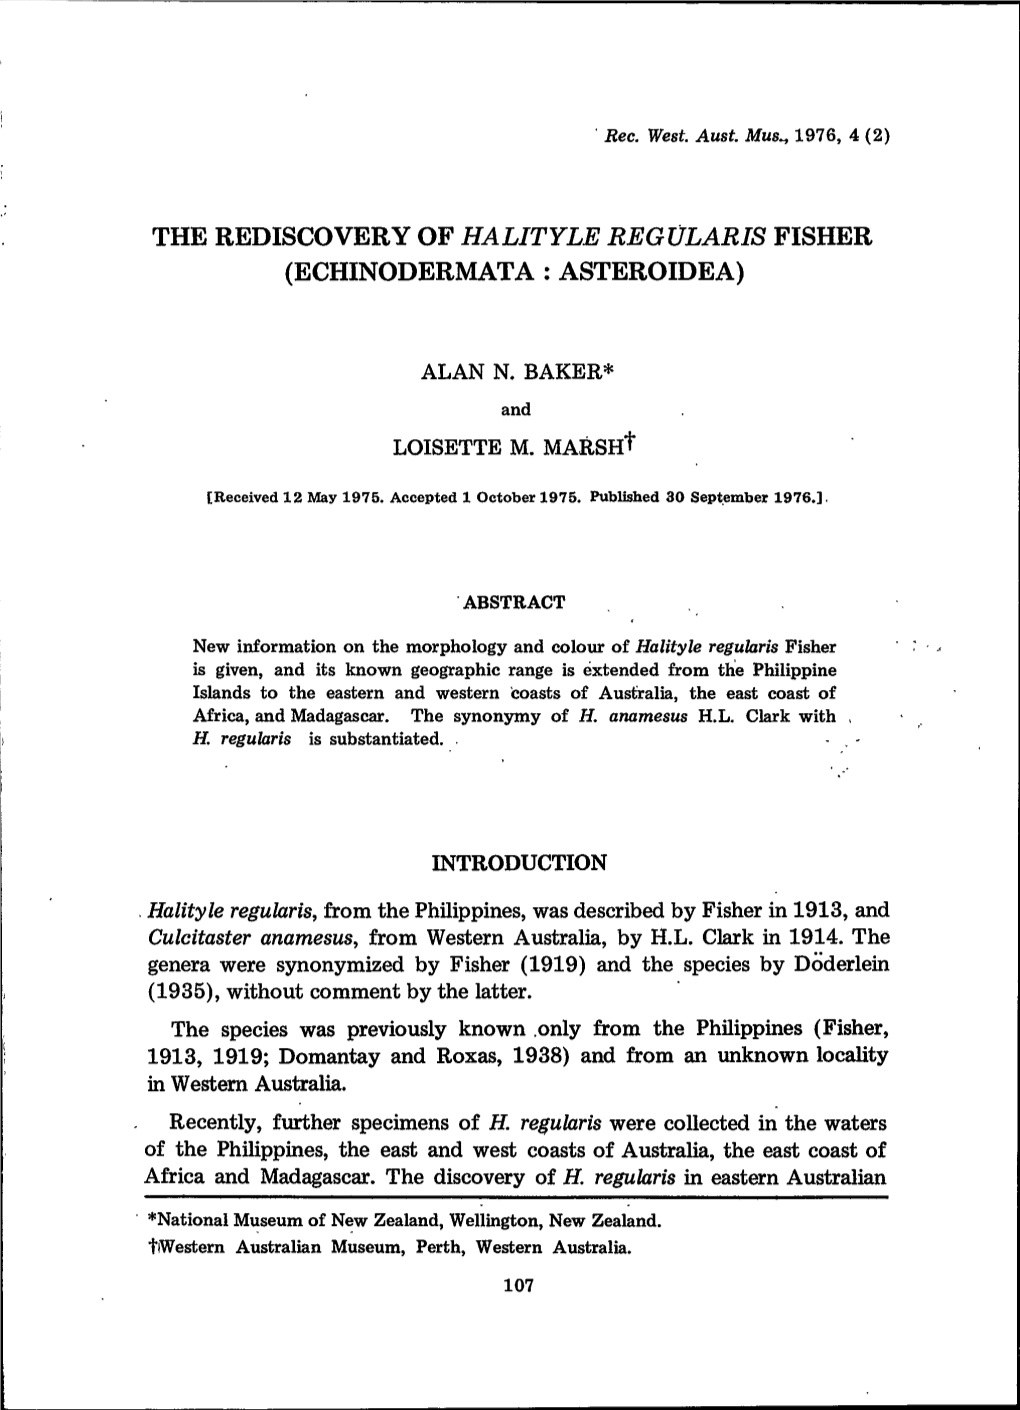 The Rediscovery of Halityle Regularis Fisher (Echinodermata: Asteroidea)